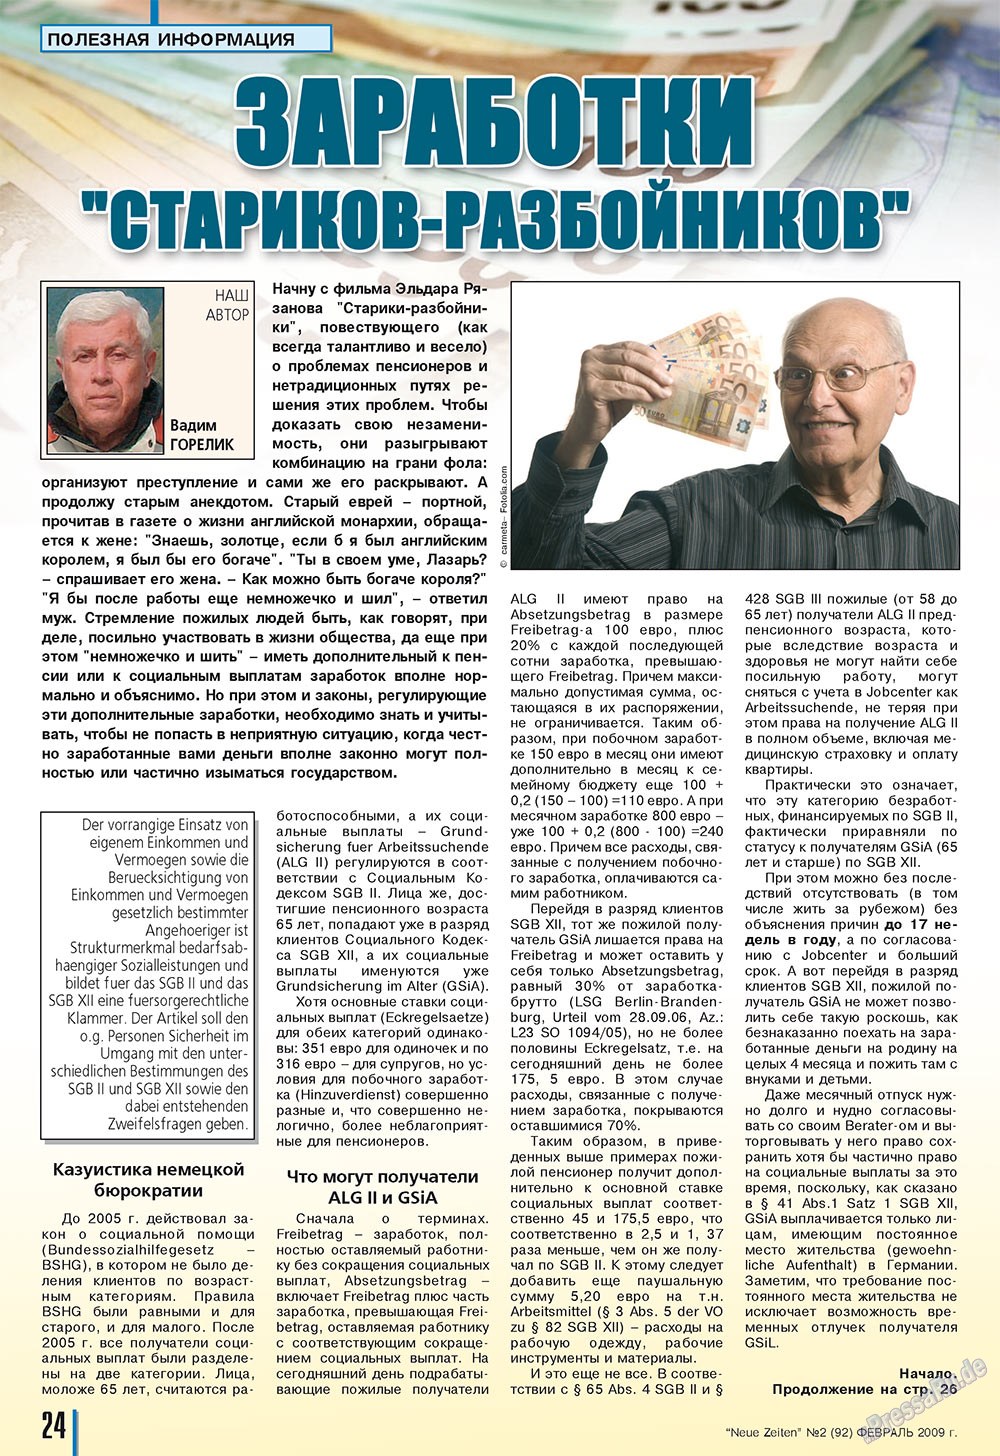 Neue Zeiten (журнал). 2009 год, номер 2, стр. 24